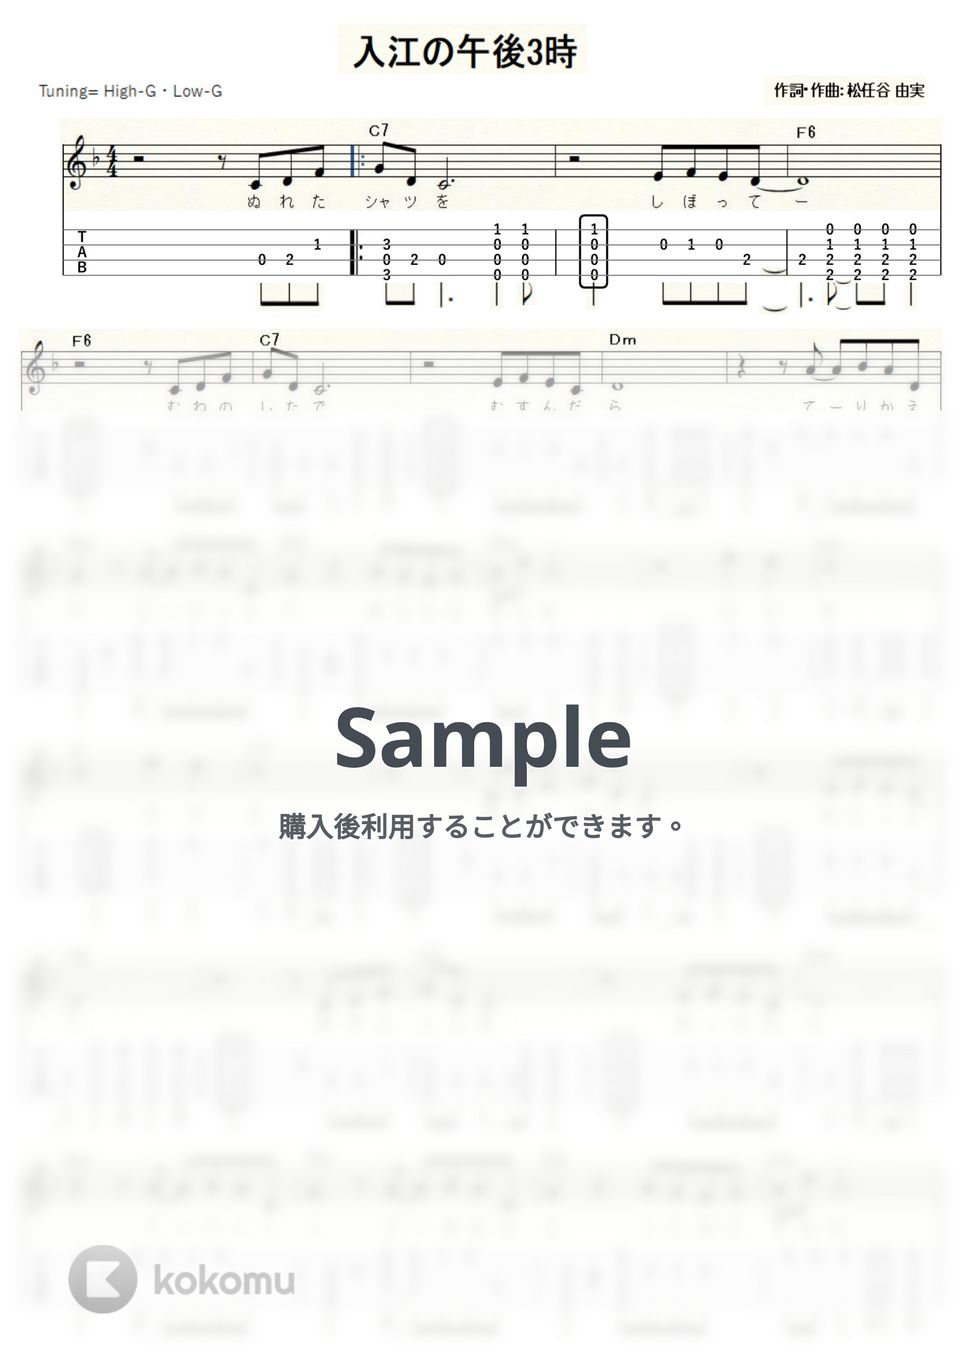 松任谷 由実 - 入江の午後3時 (ｳｸﾚﾚｿﾛ/High-G・Low-G/中級) by ukulelepapa